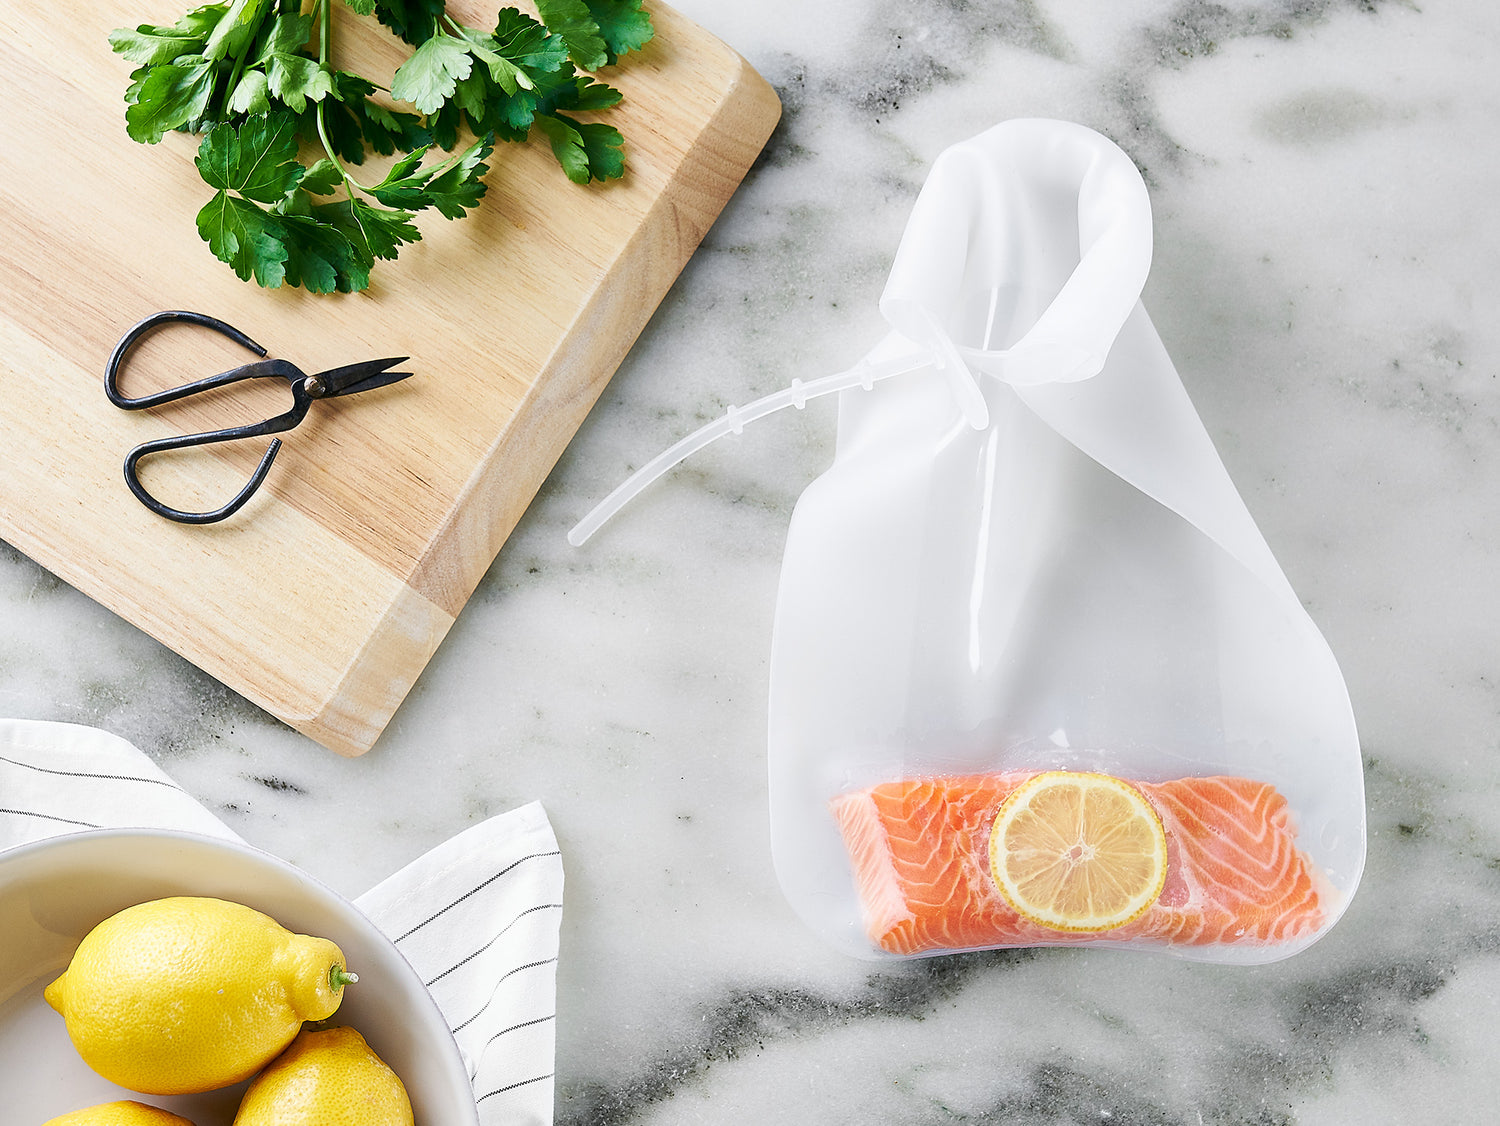 Meet the Anova Reusable Silicone Bag by stasher – Anova Culinary